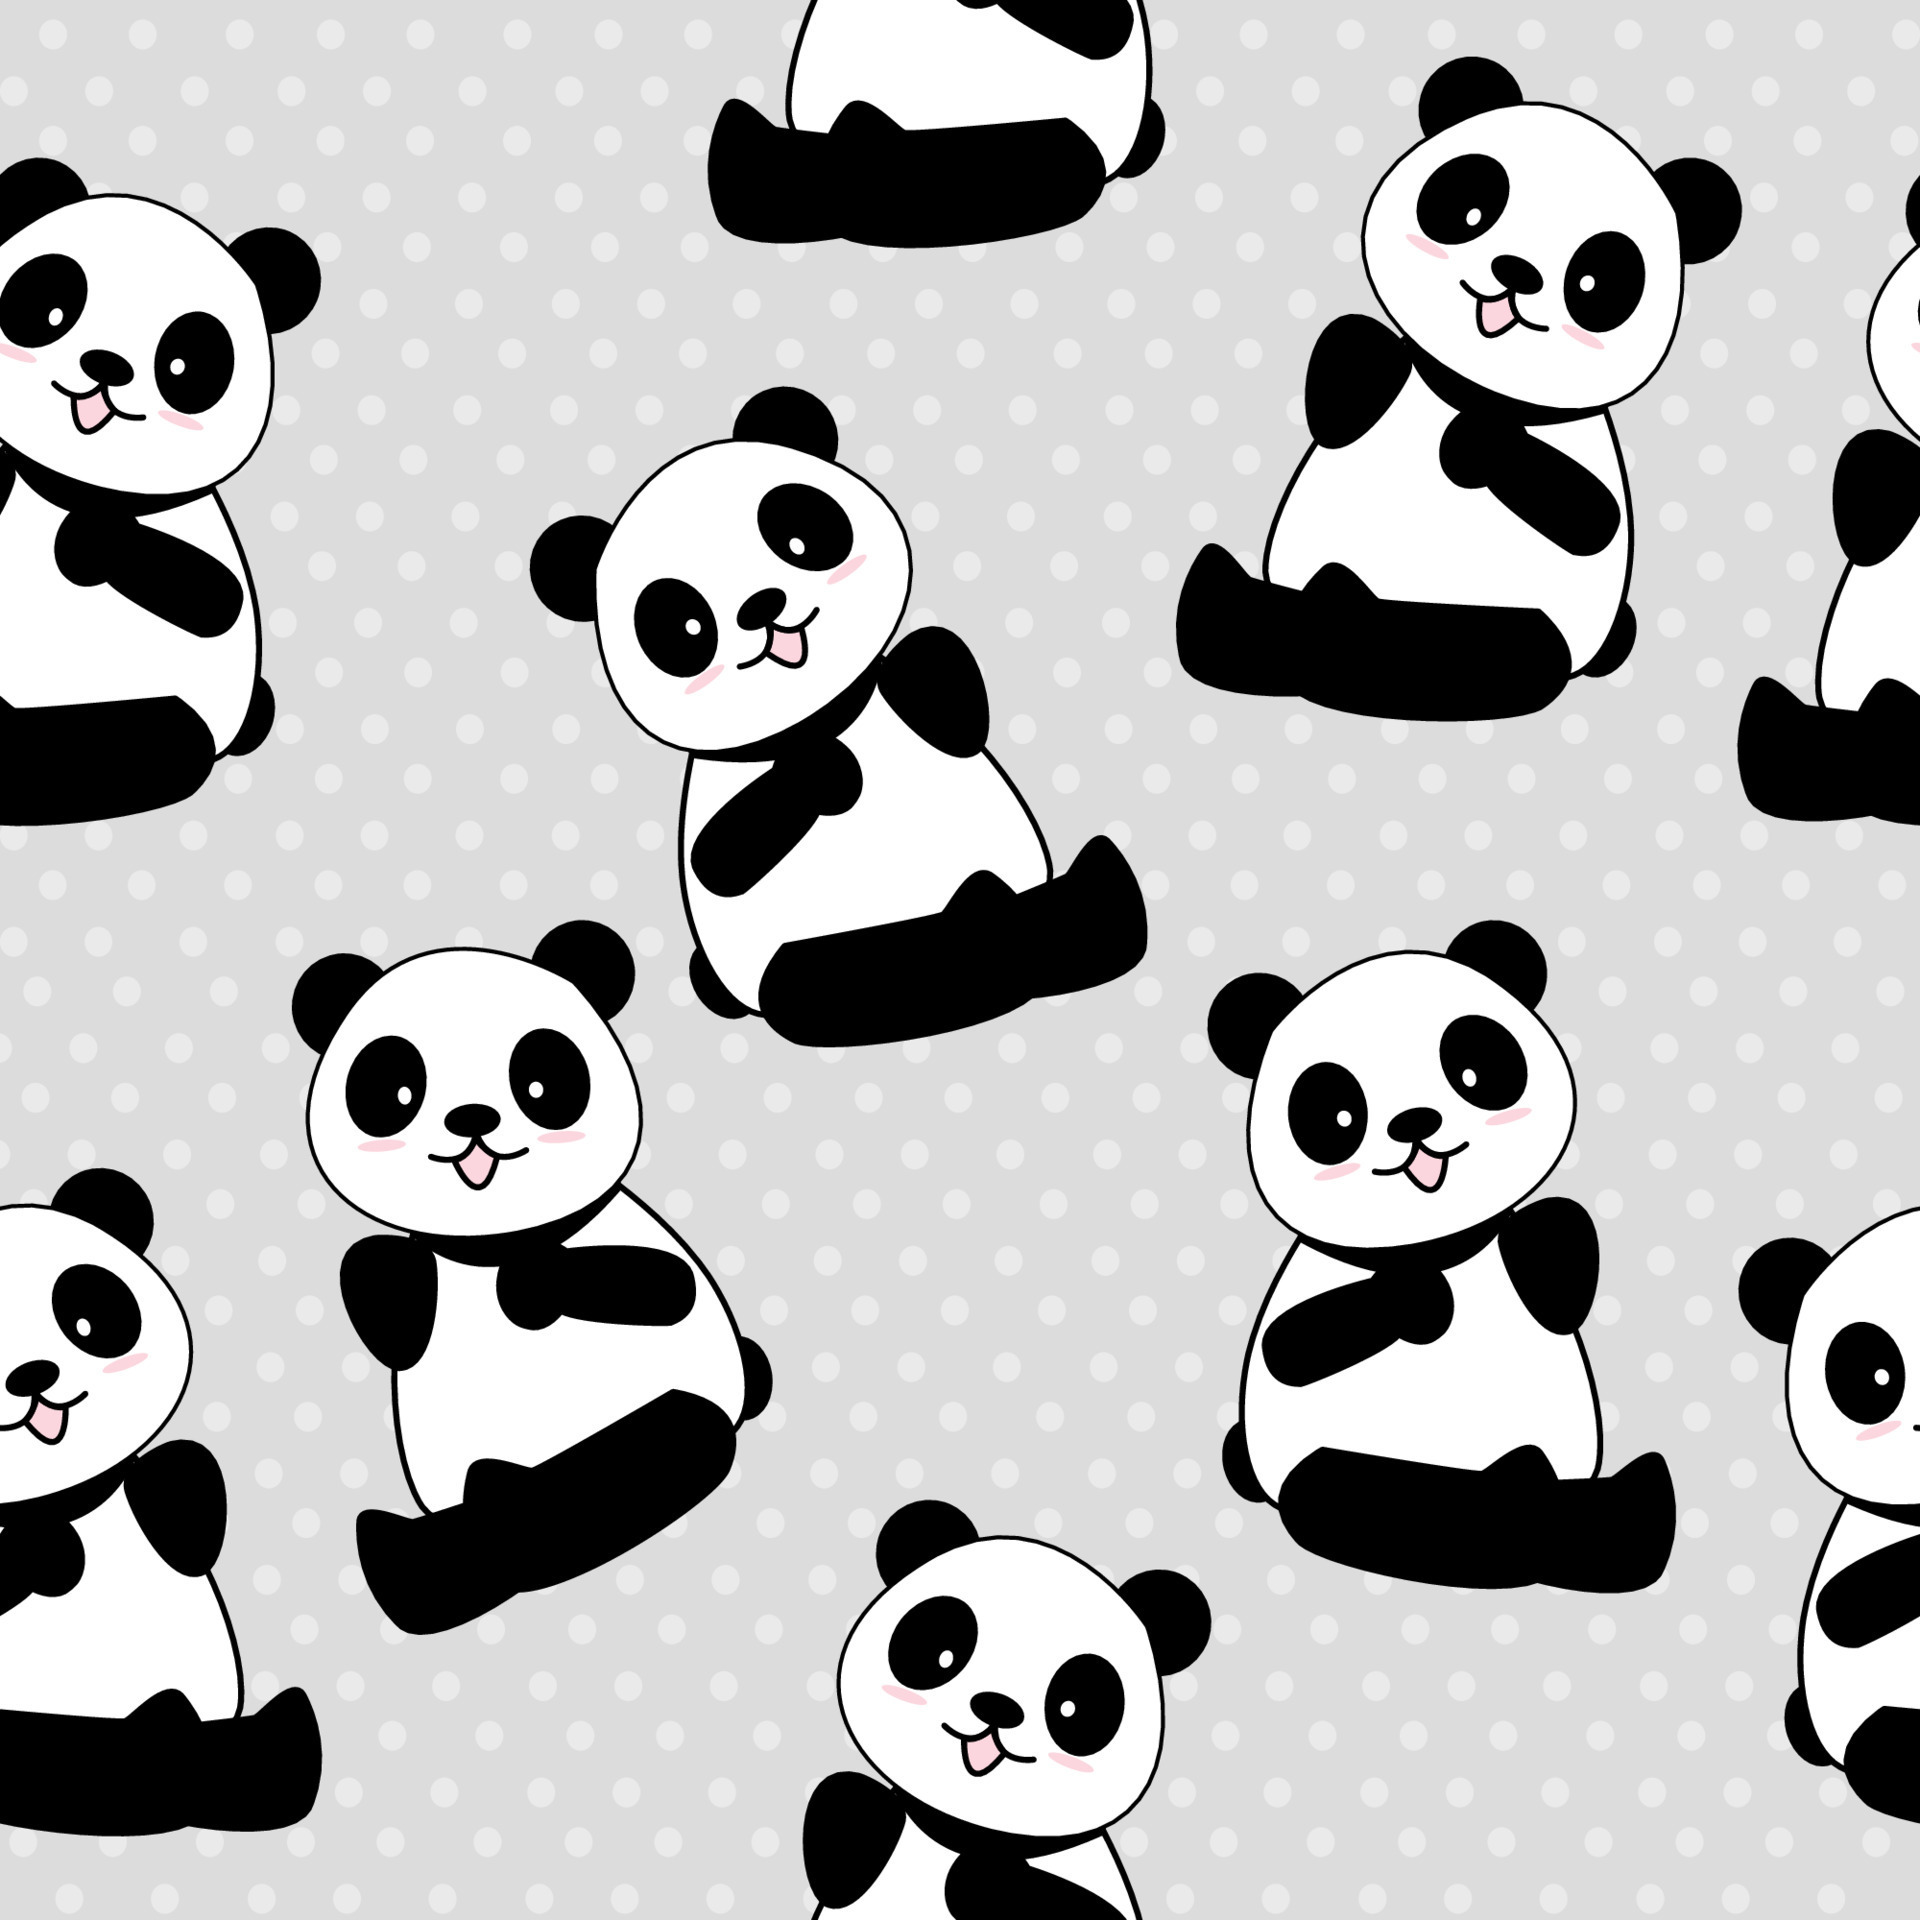 Cute Panda Seamless Pattern Background, Cartoon Panda Bears Vector  illustration, Creative kids for fabric, wrapping, textile, wallpaper,  apparel. 7888288 Vector Art at Vecteezy